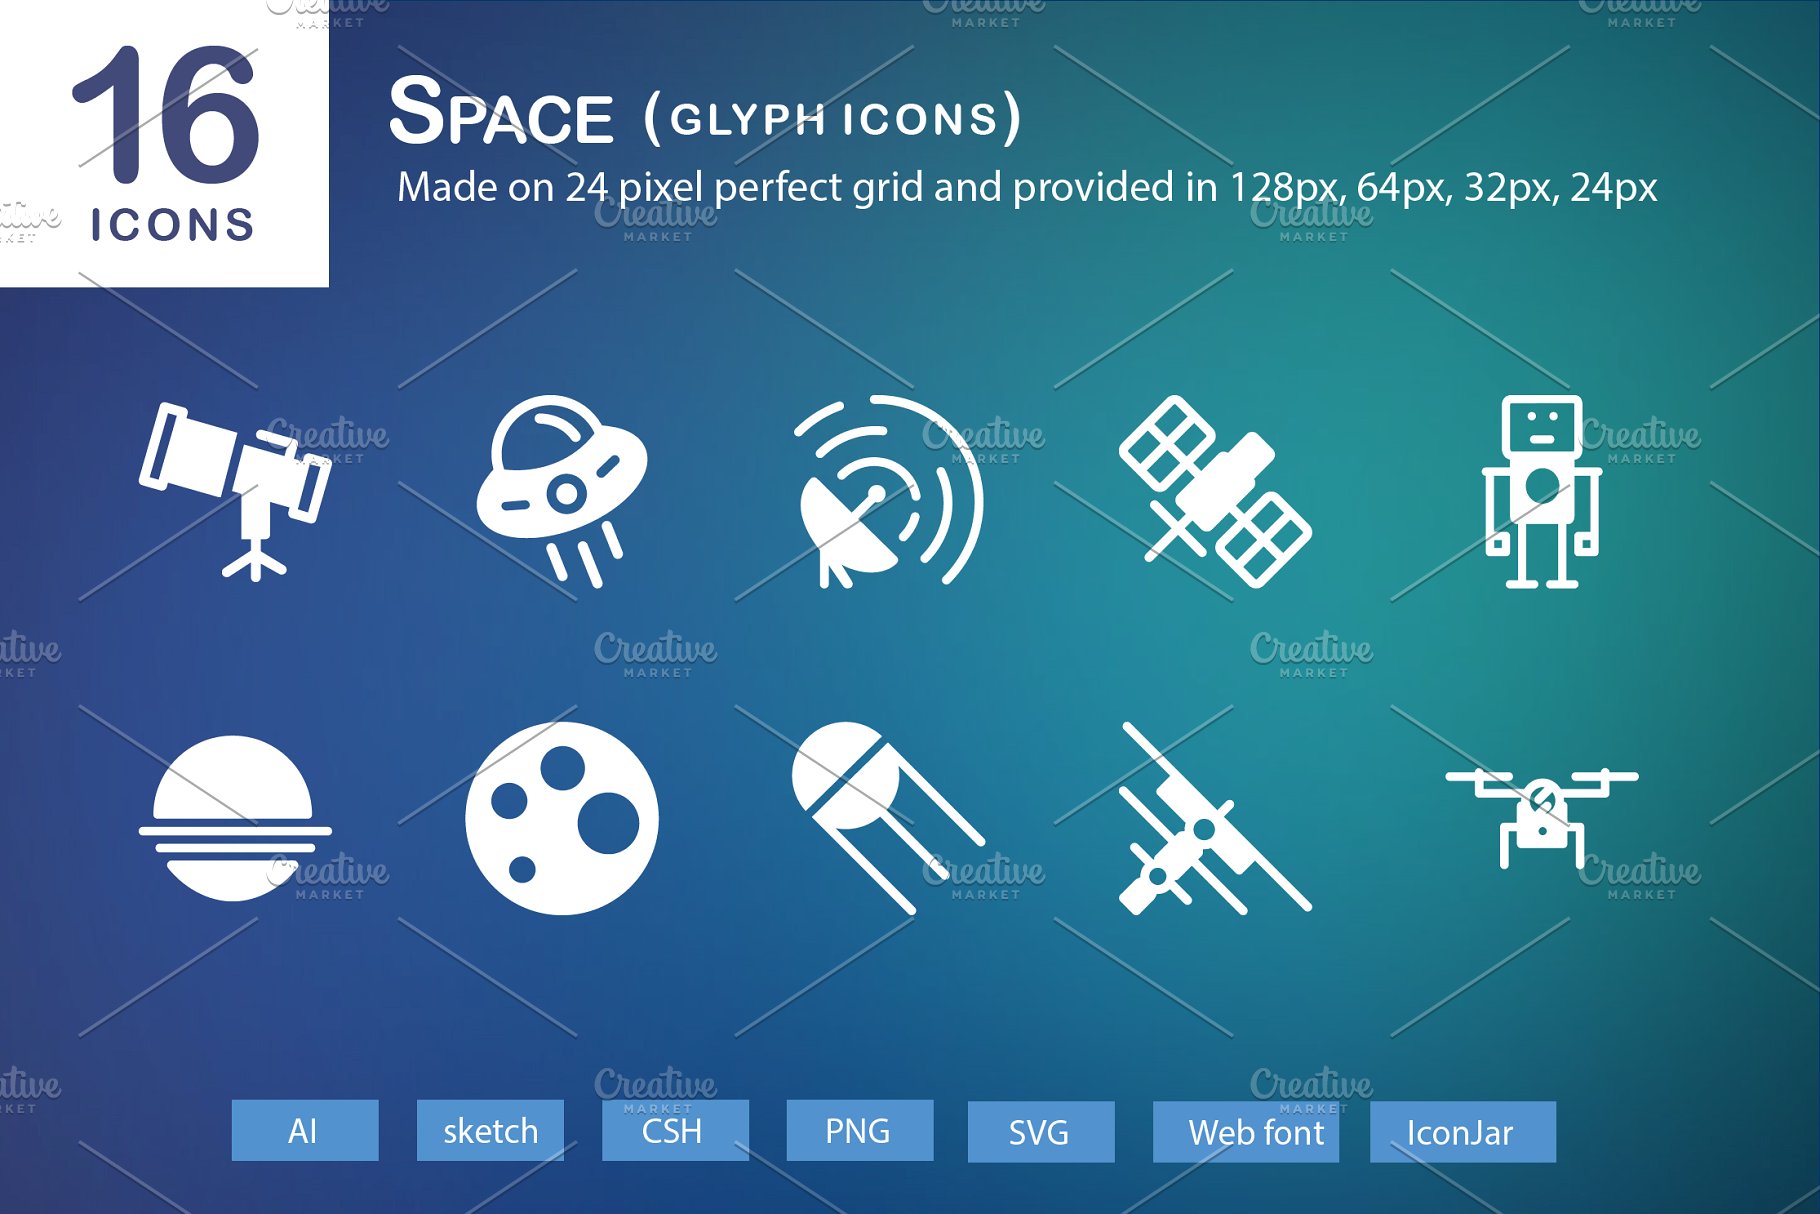 宇宙太空图标 16 Space Glyph Icons #9